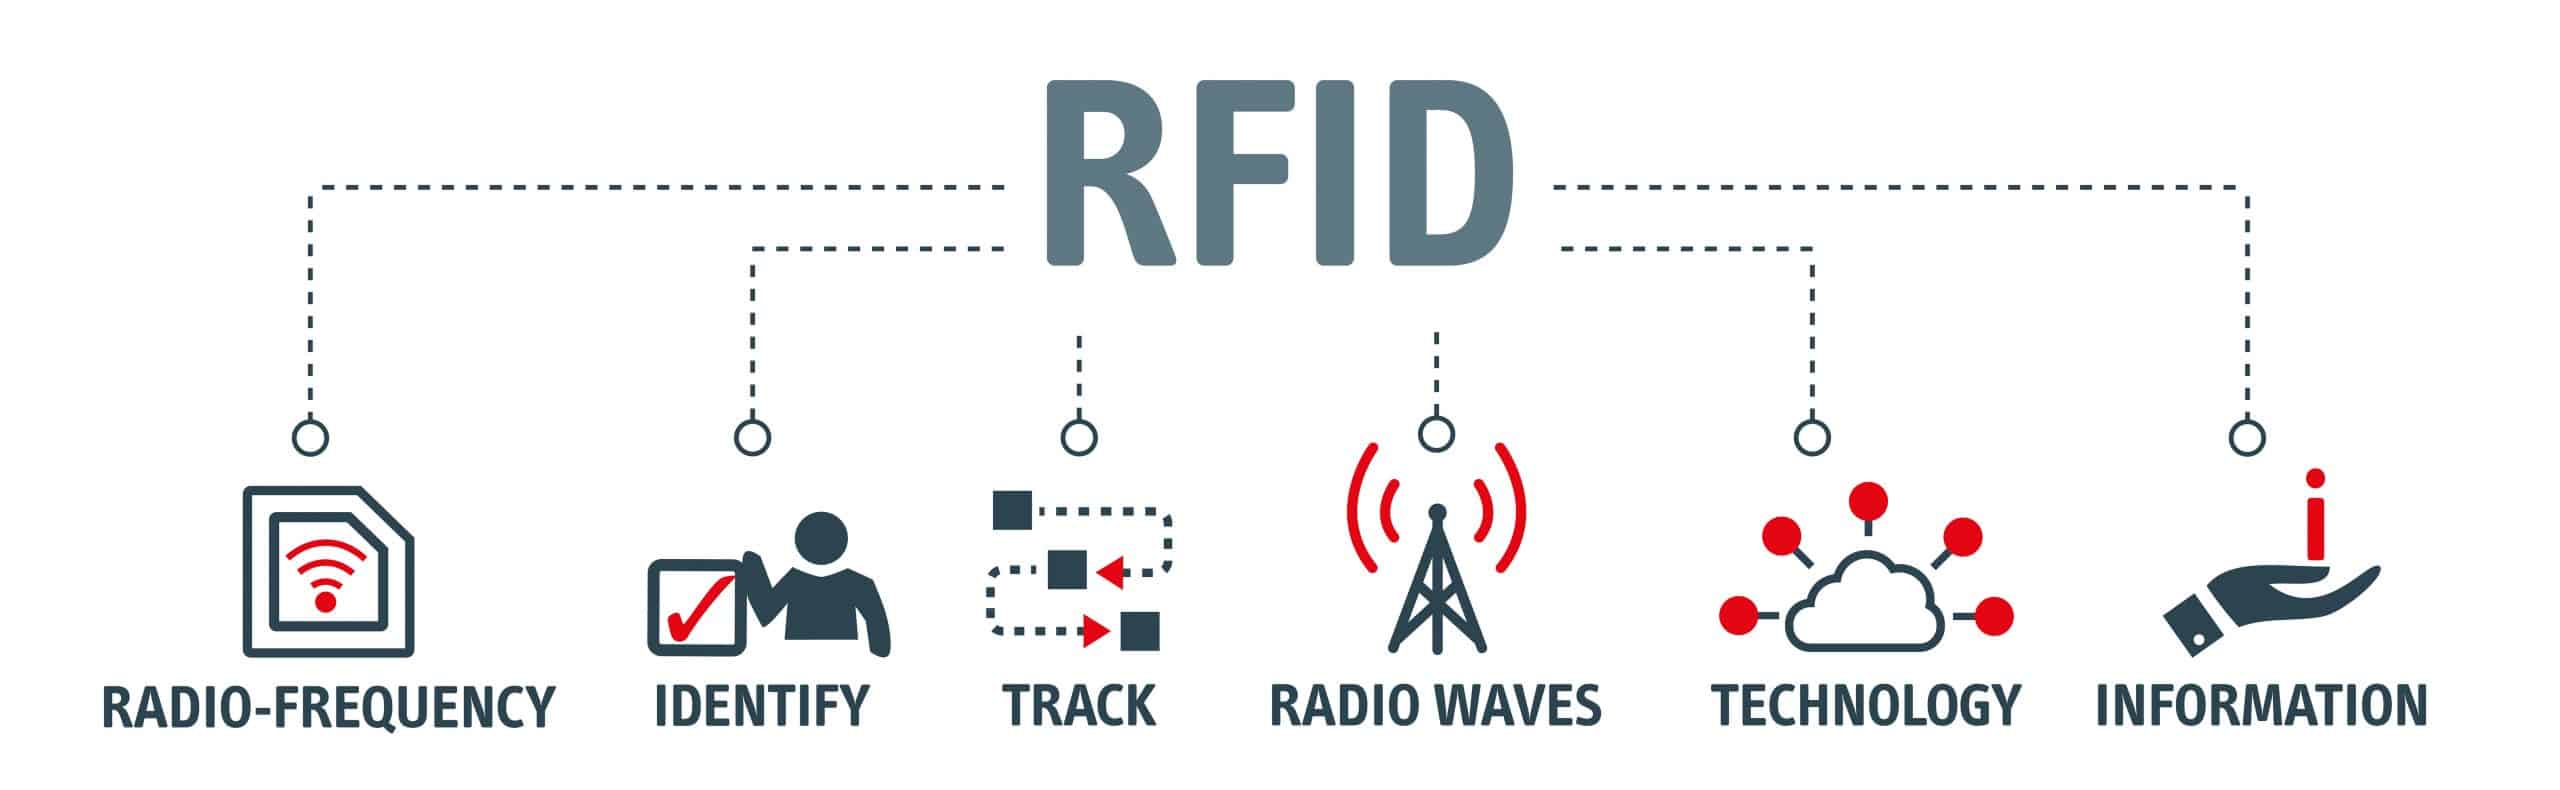 RFID flow chart